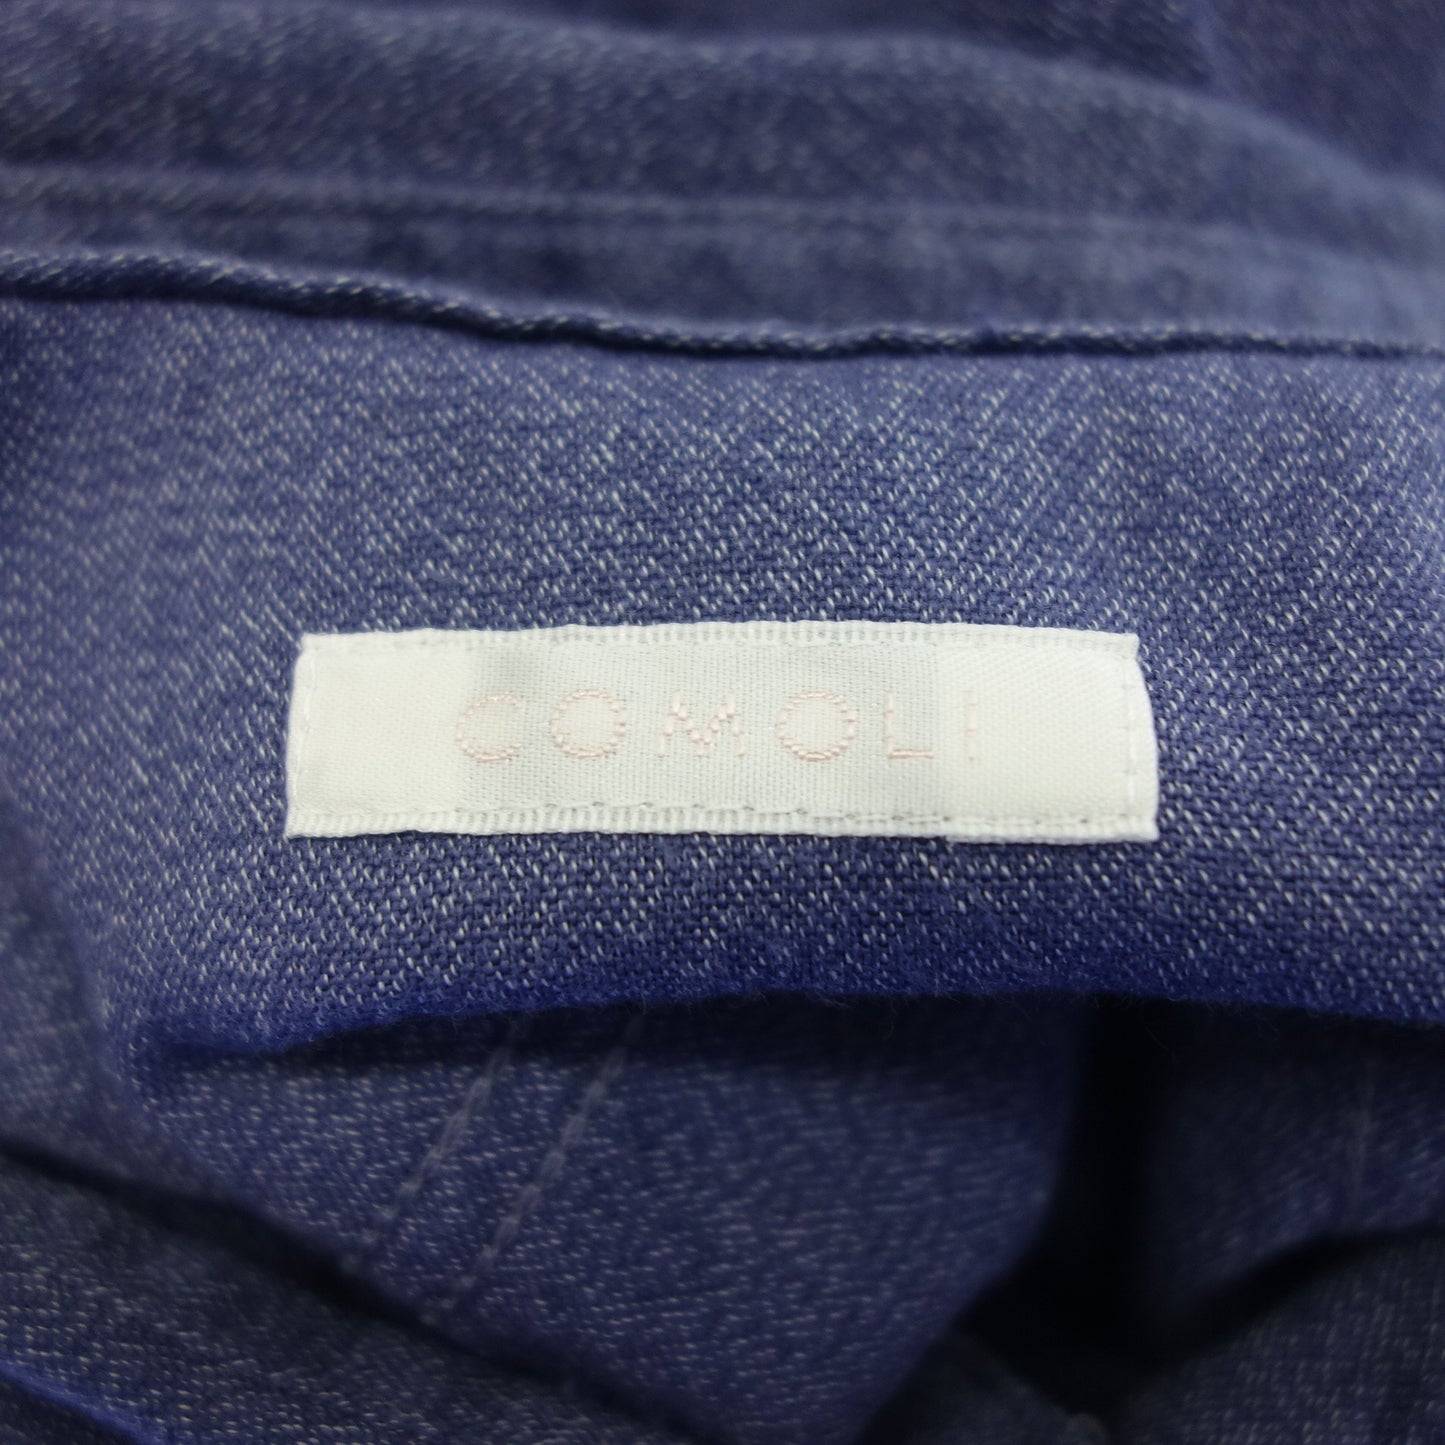 COMOLI Shirt Cotton Work Shirt U03-020 Men's Purple 2 COMOLI [AFB2] [Used] 